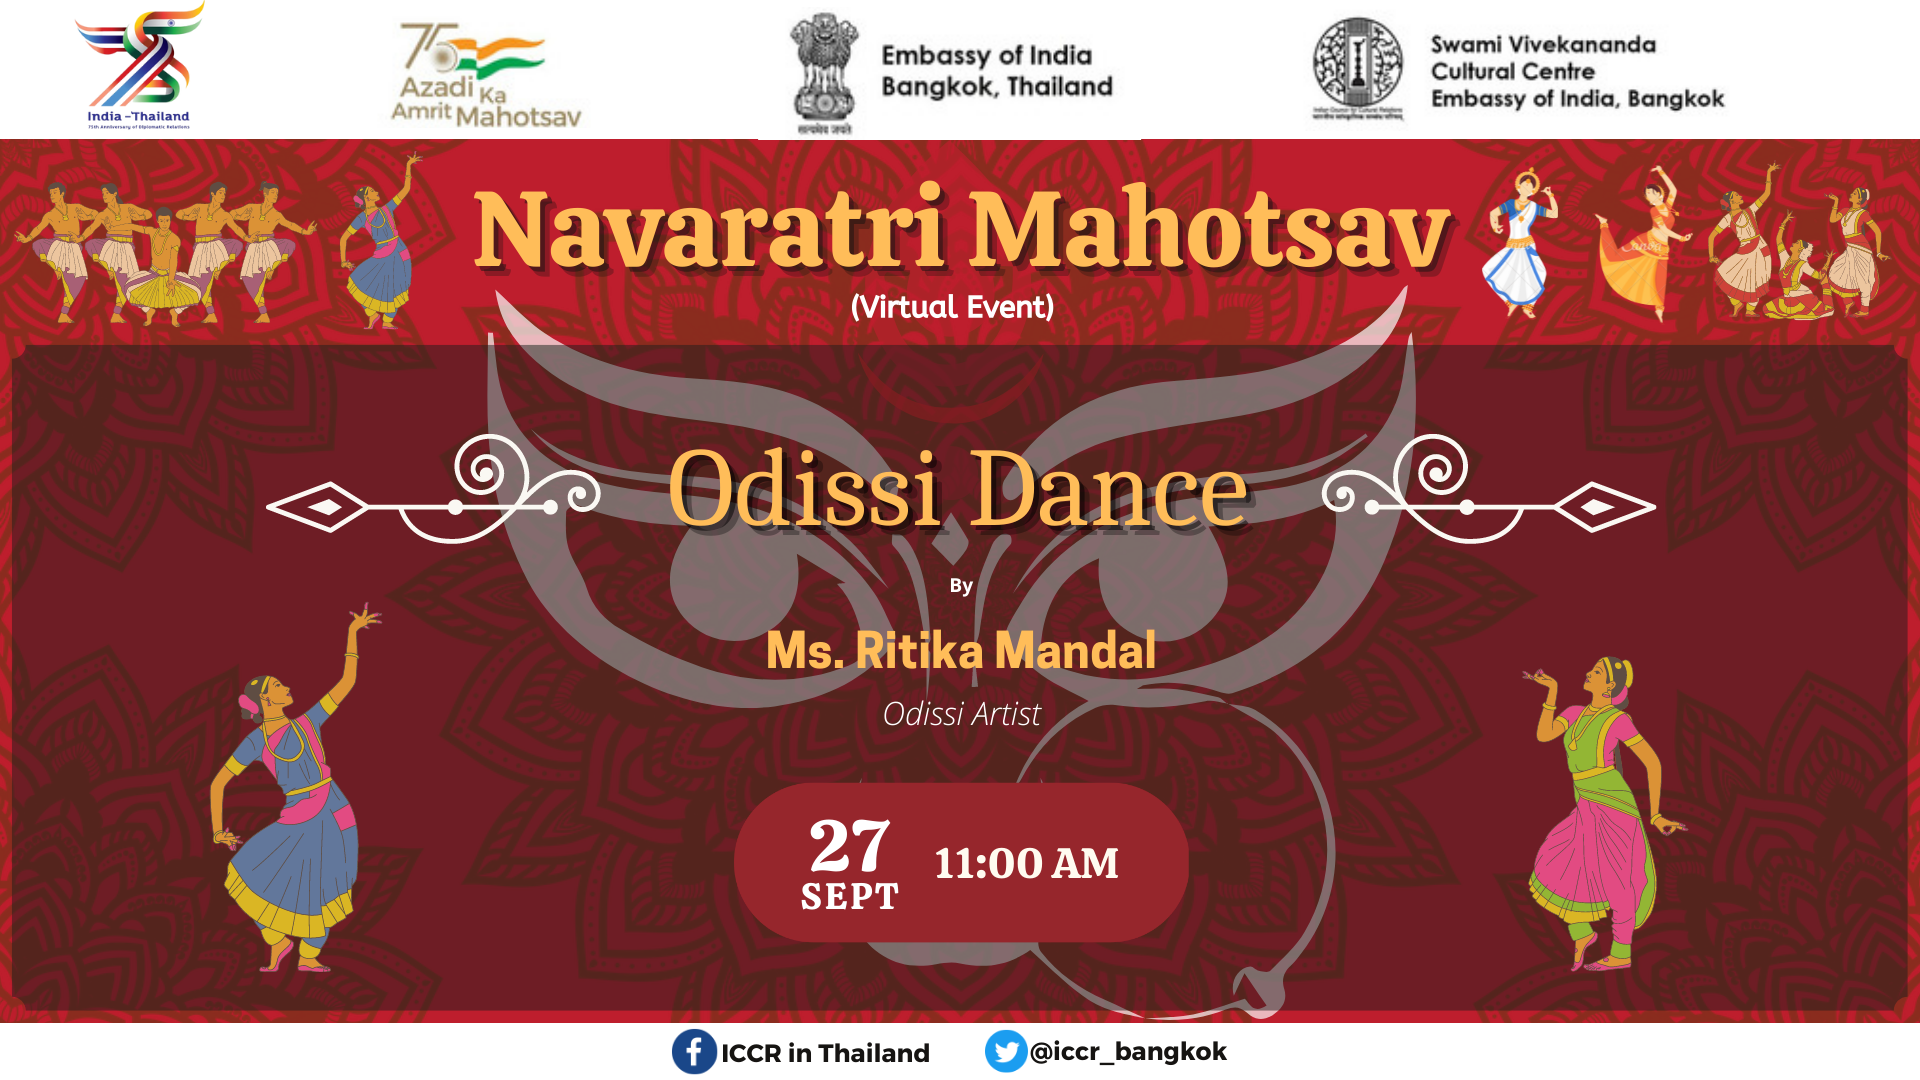 The SVCC's Embassy of India, Bangkok, is organizing a “Navratri Mahotsav” a virtual event in celebration of the Navratri Festival from September 26 to October 4, 2022. 